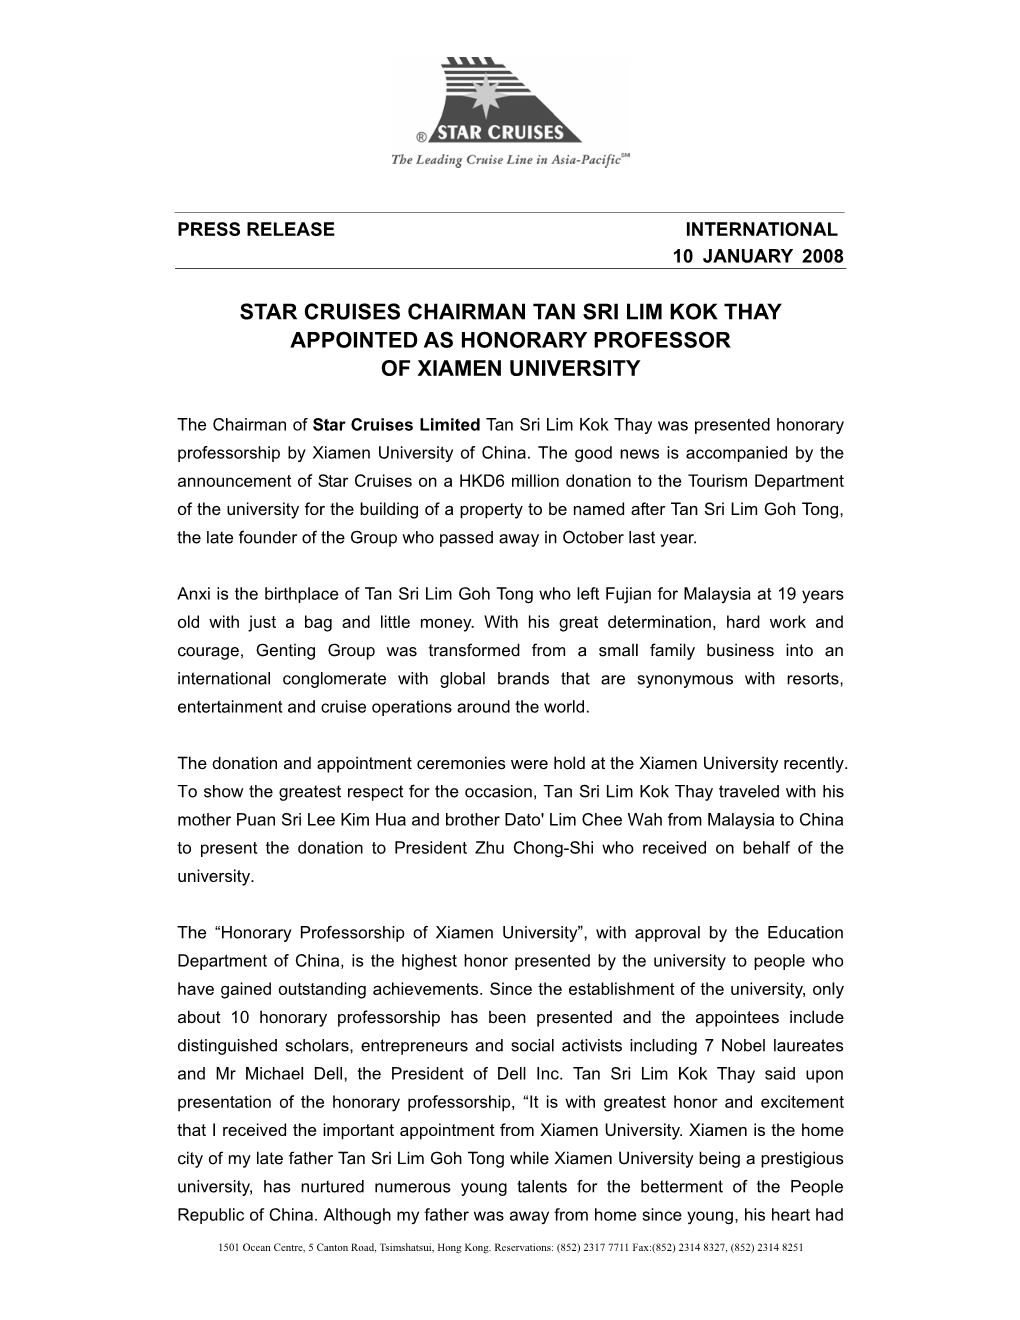 Star Cruises Chairman Tan Sri Lim Kok Thay Appointed As Honorary Professor of Xiamen University